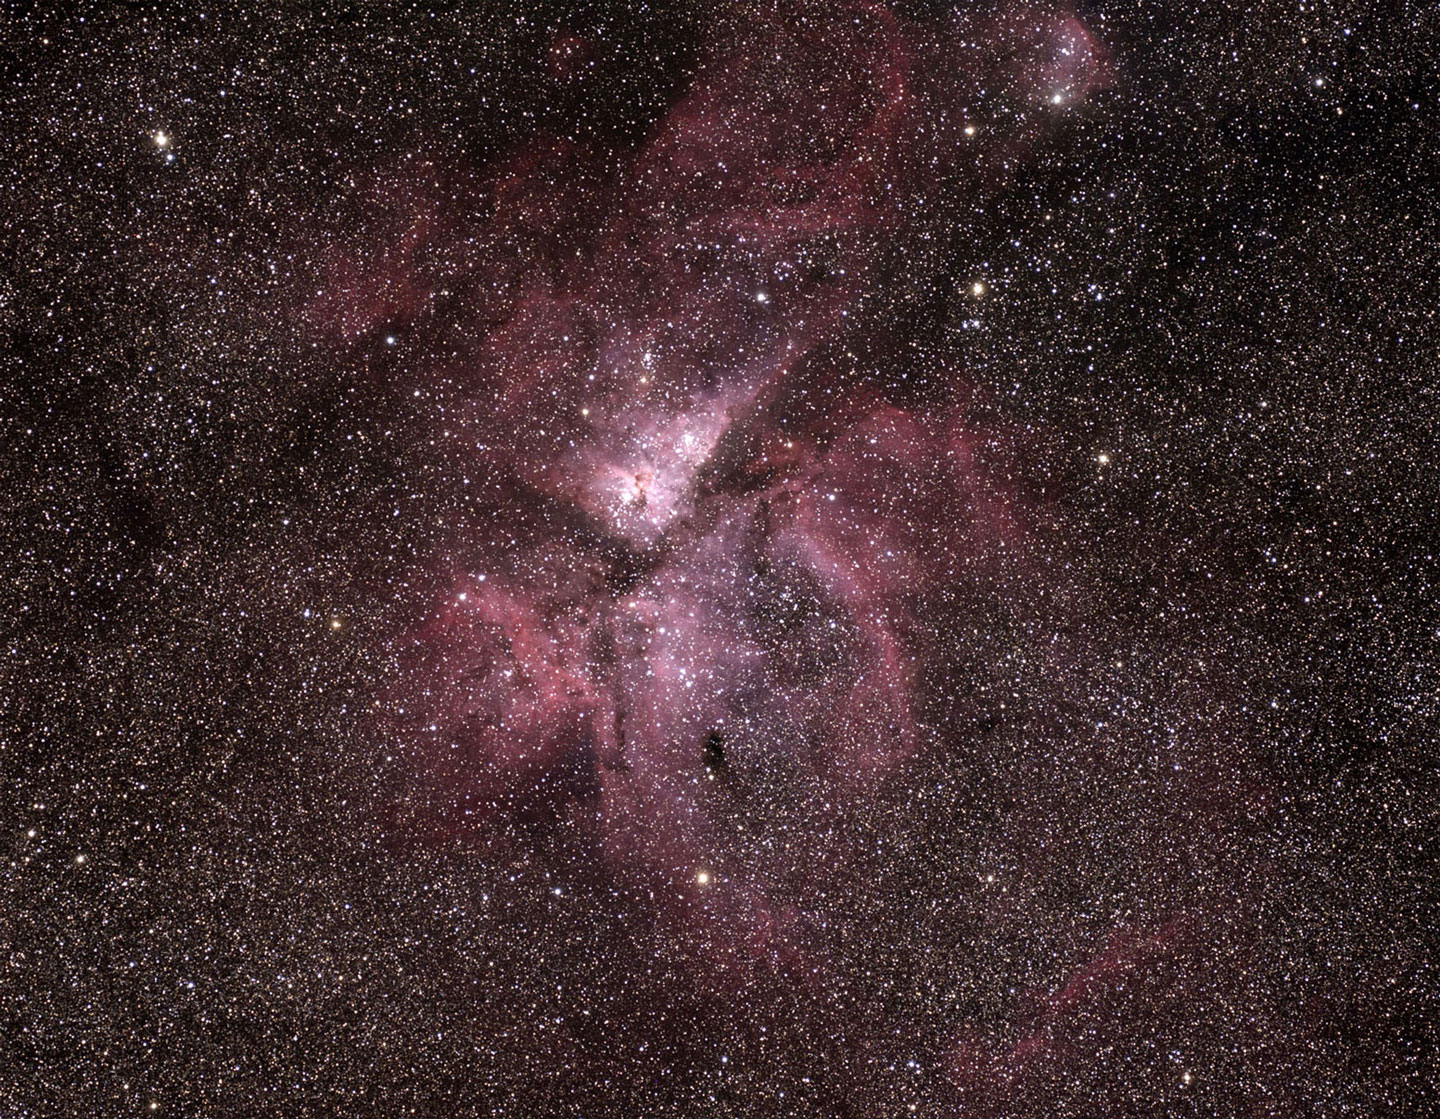 A wide-field image of the region near the Carina Nebula